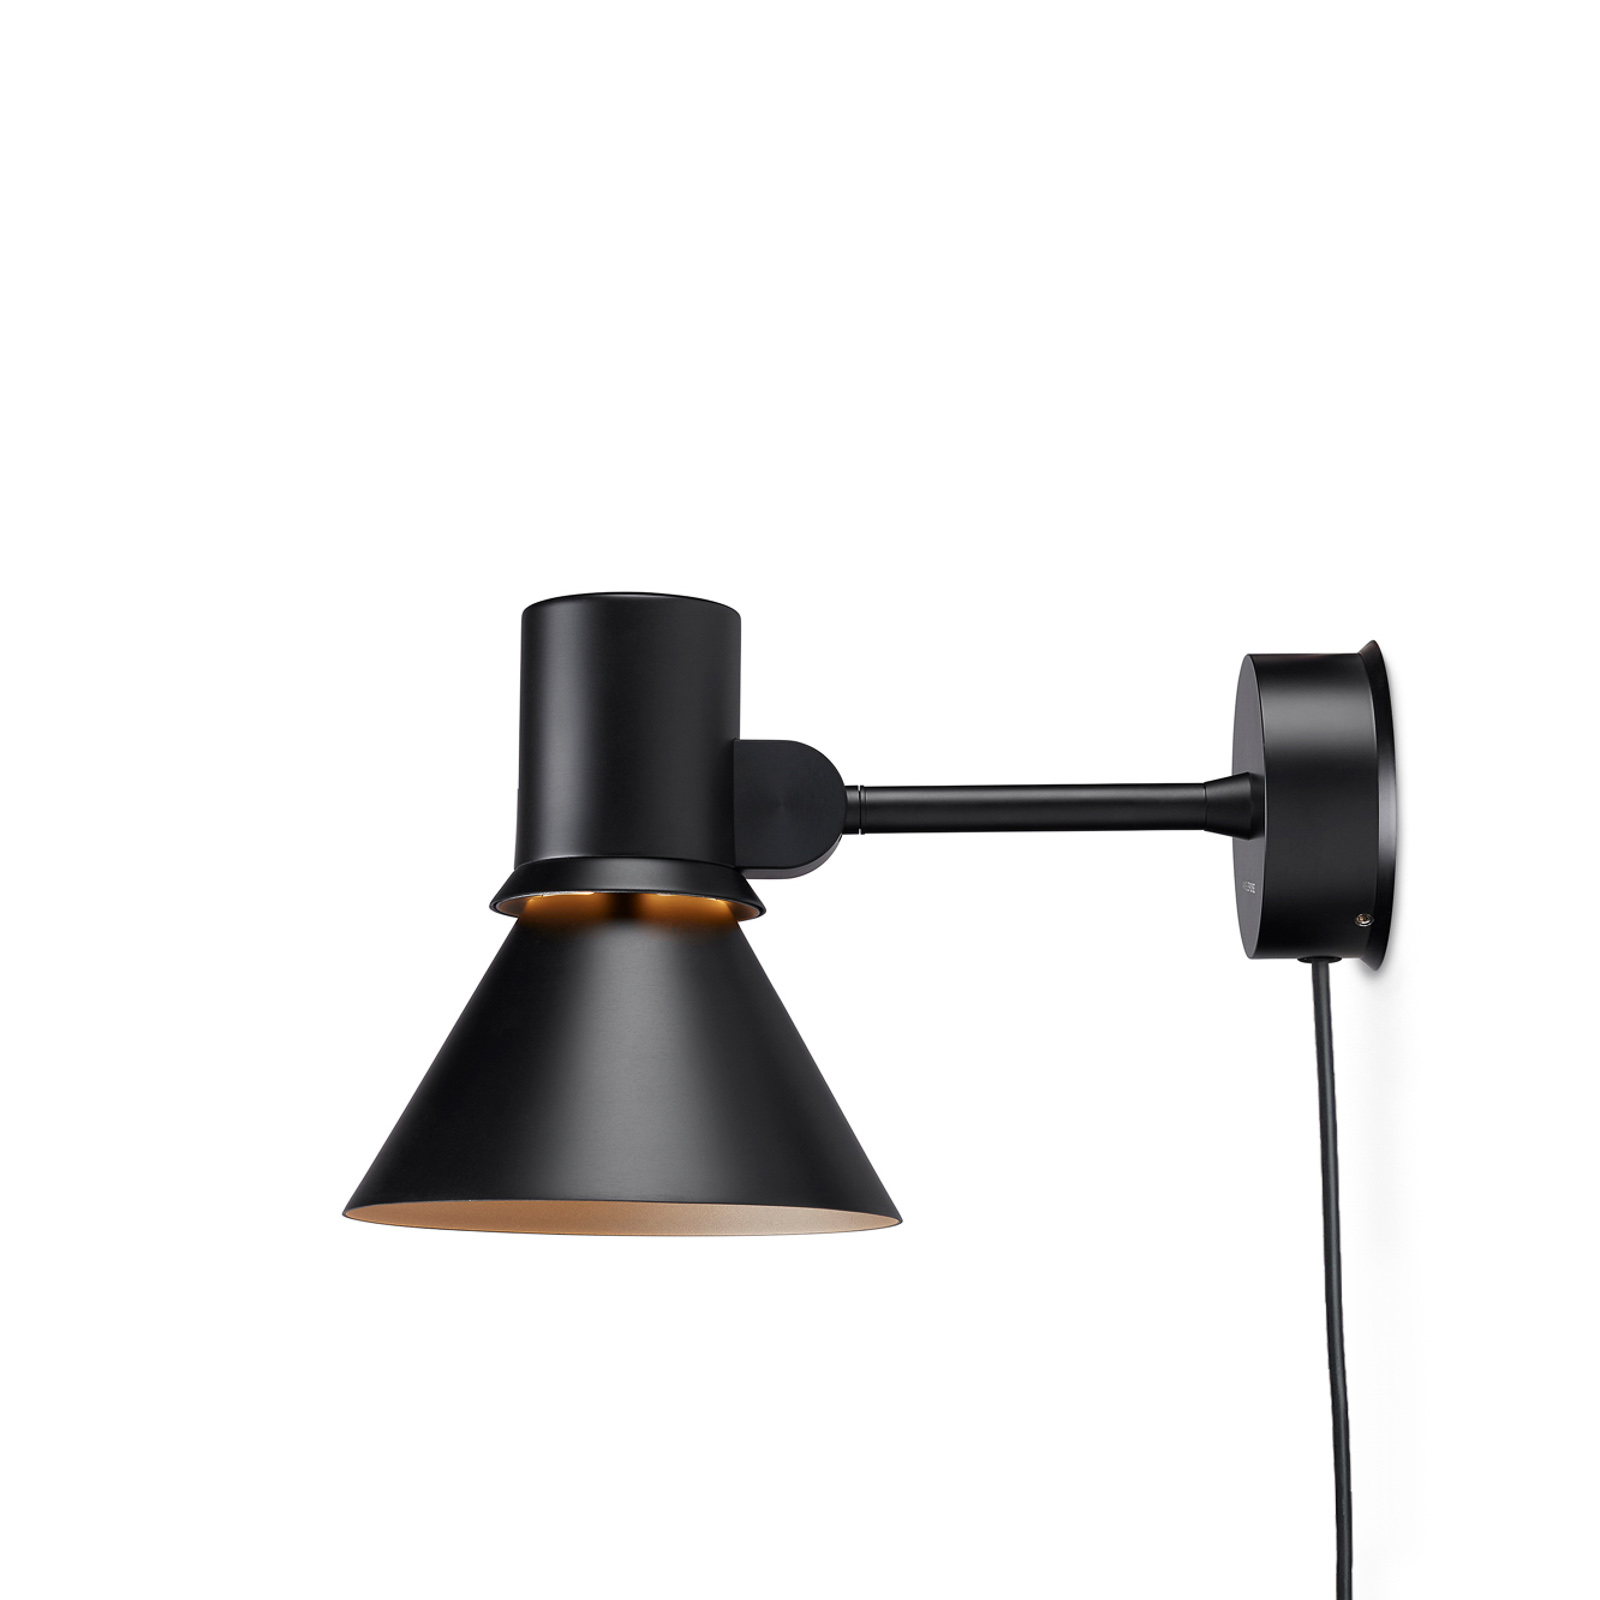 Anglepoise Type 80 W1 wandlamp, stekker, zwart